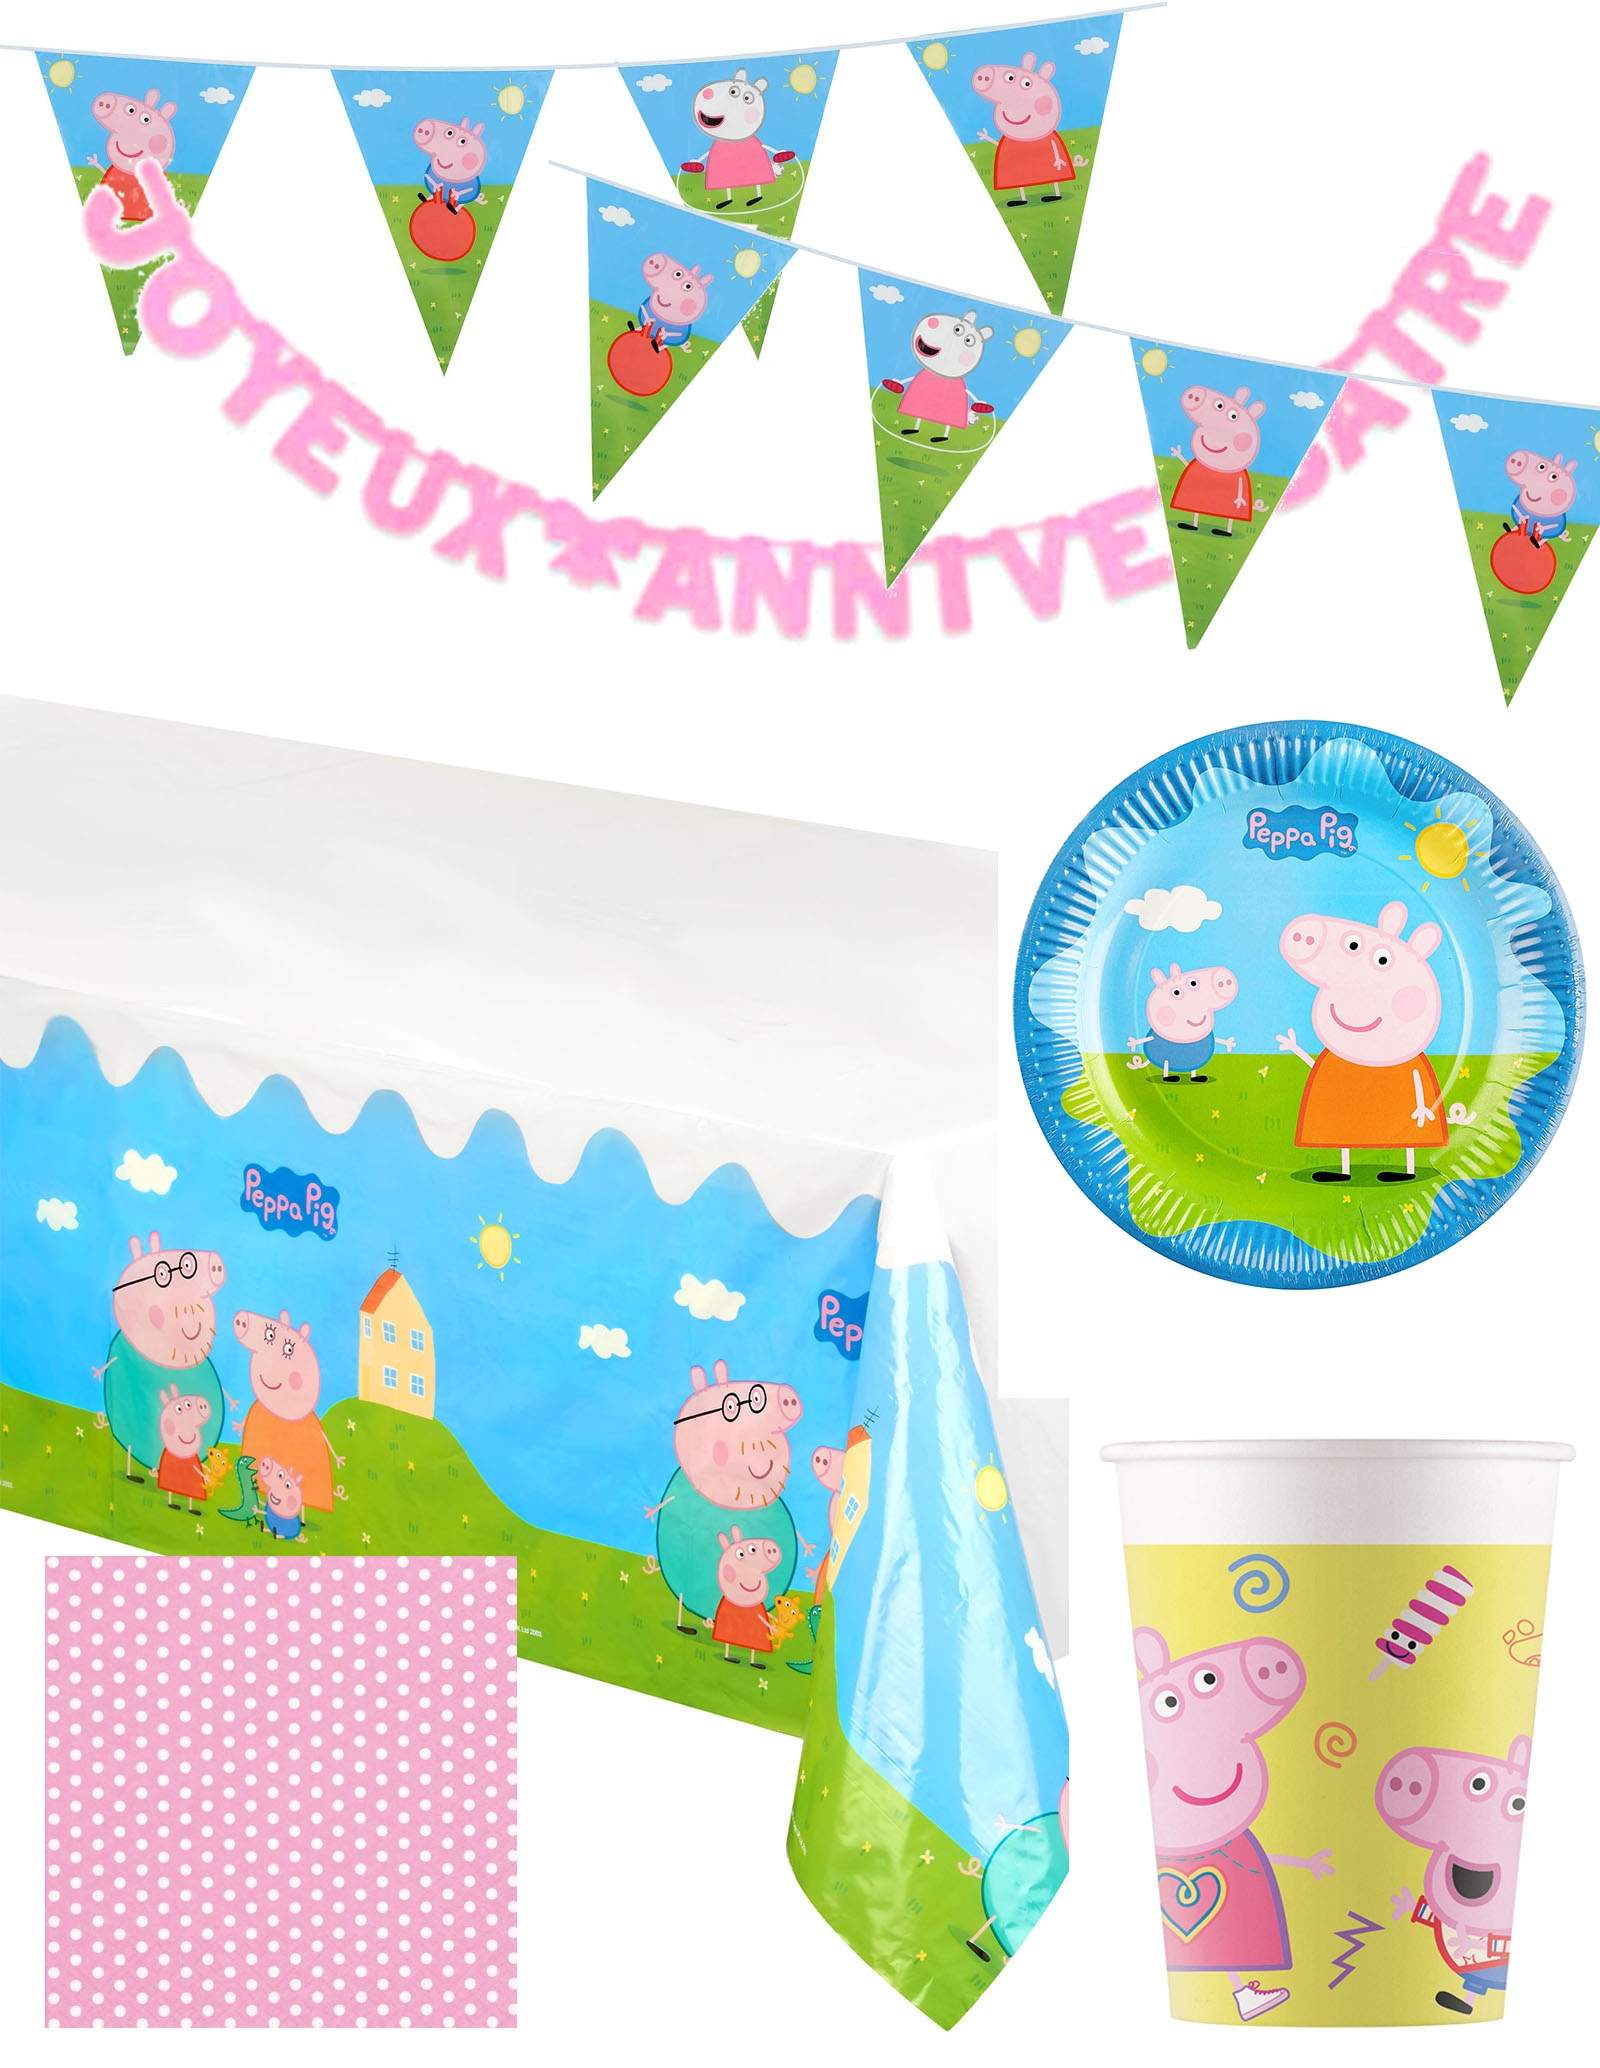 Peppa pig birthday decoration pack